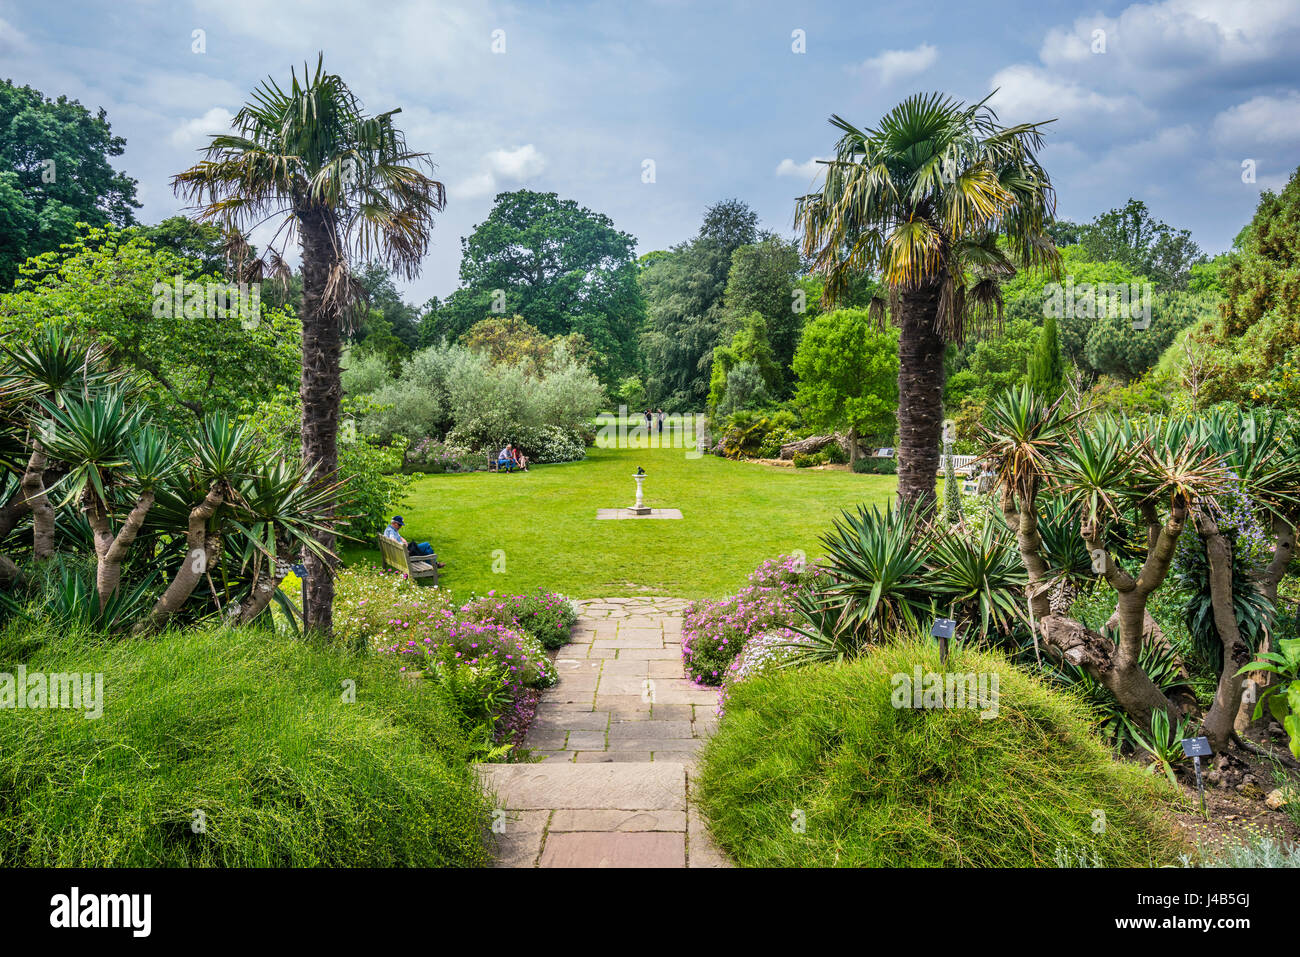 United Kingdom, England, Kew Gardens in the London Borough of Richmond upon Thames, view of the Mediterranean Garden Stock Photo